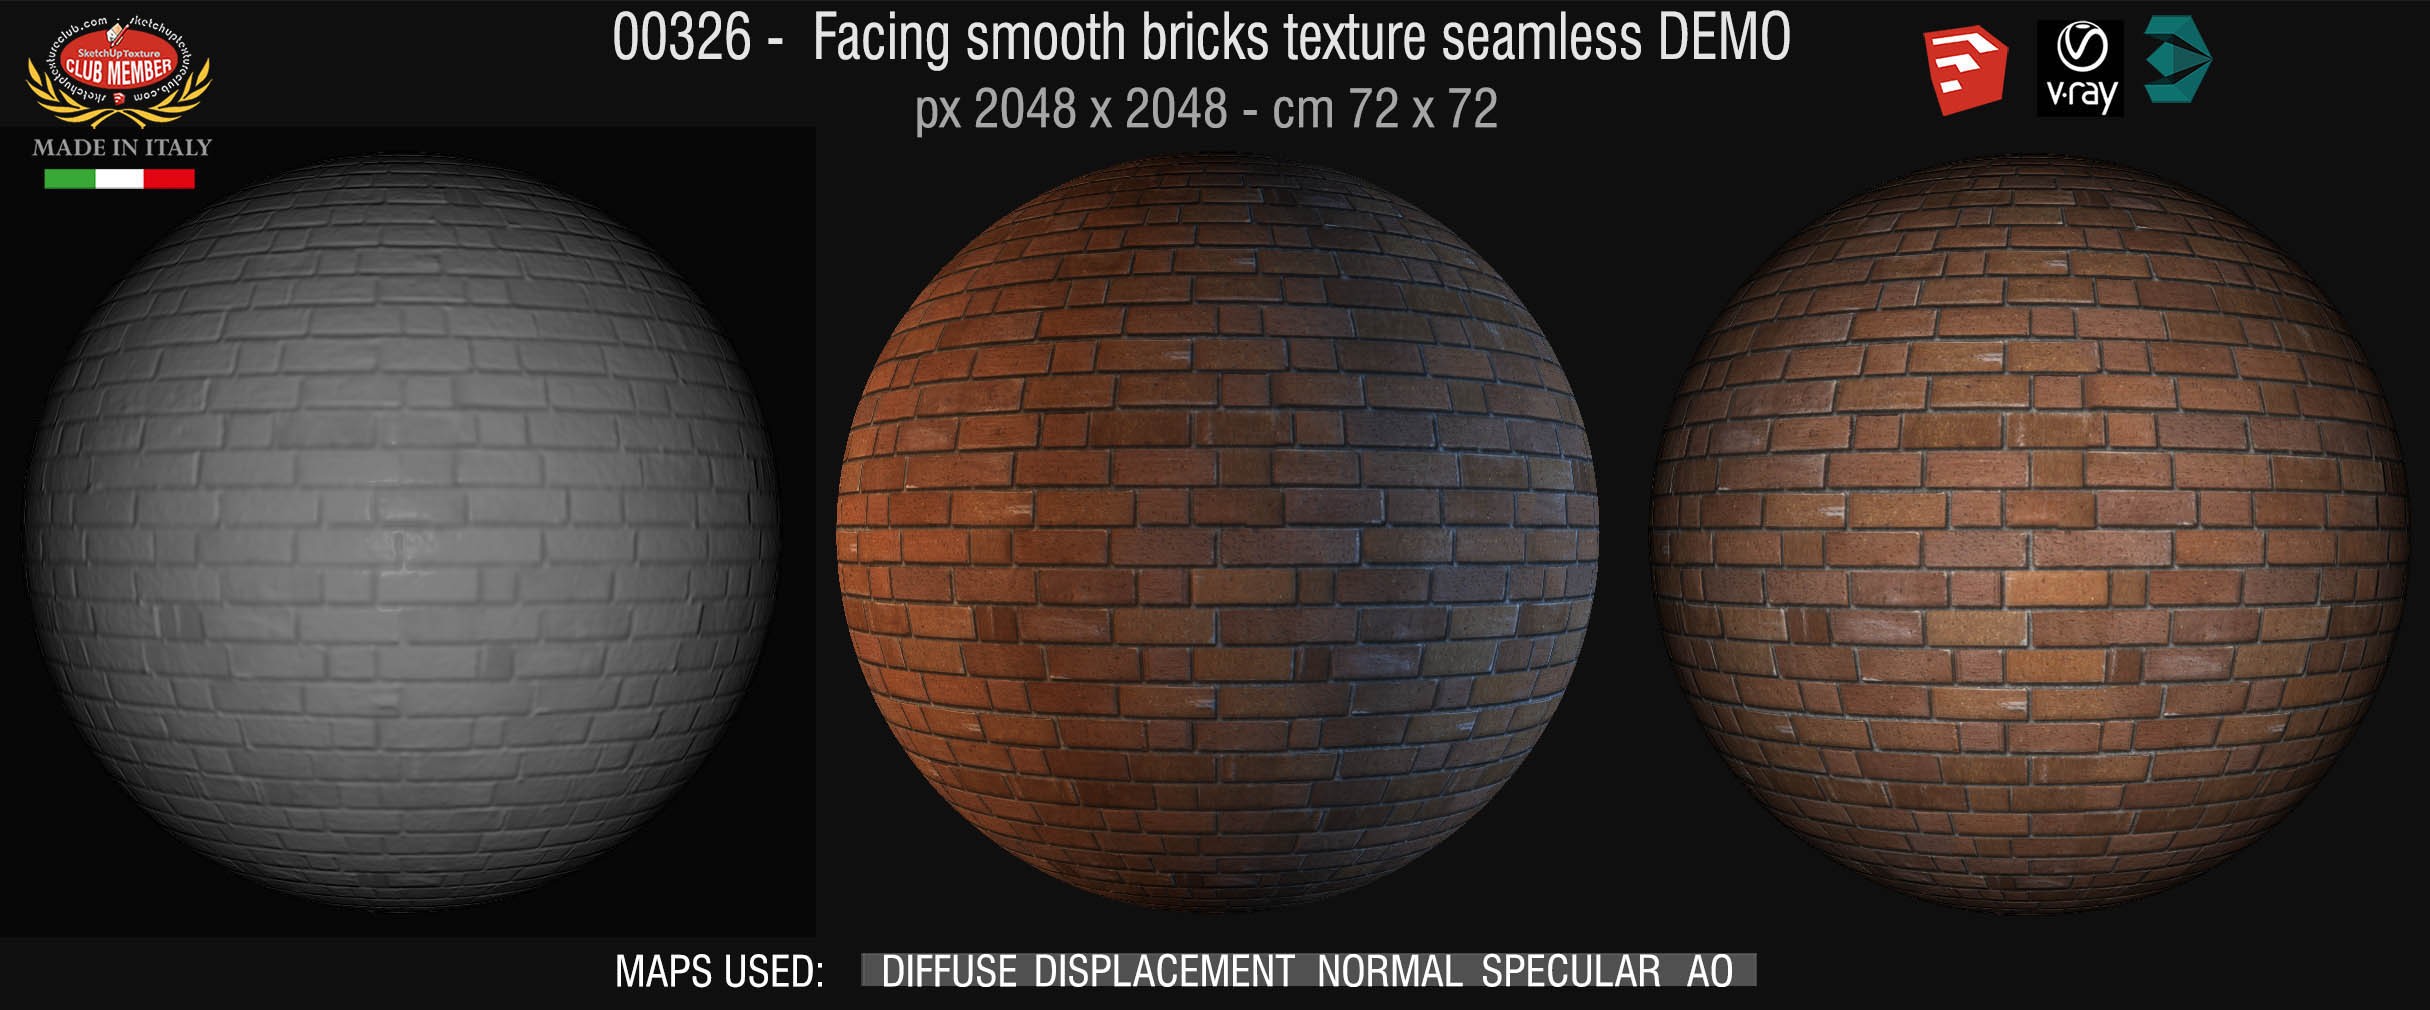 00326 Facing smooth bricks texture seamless + maps DEMO